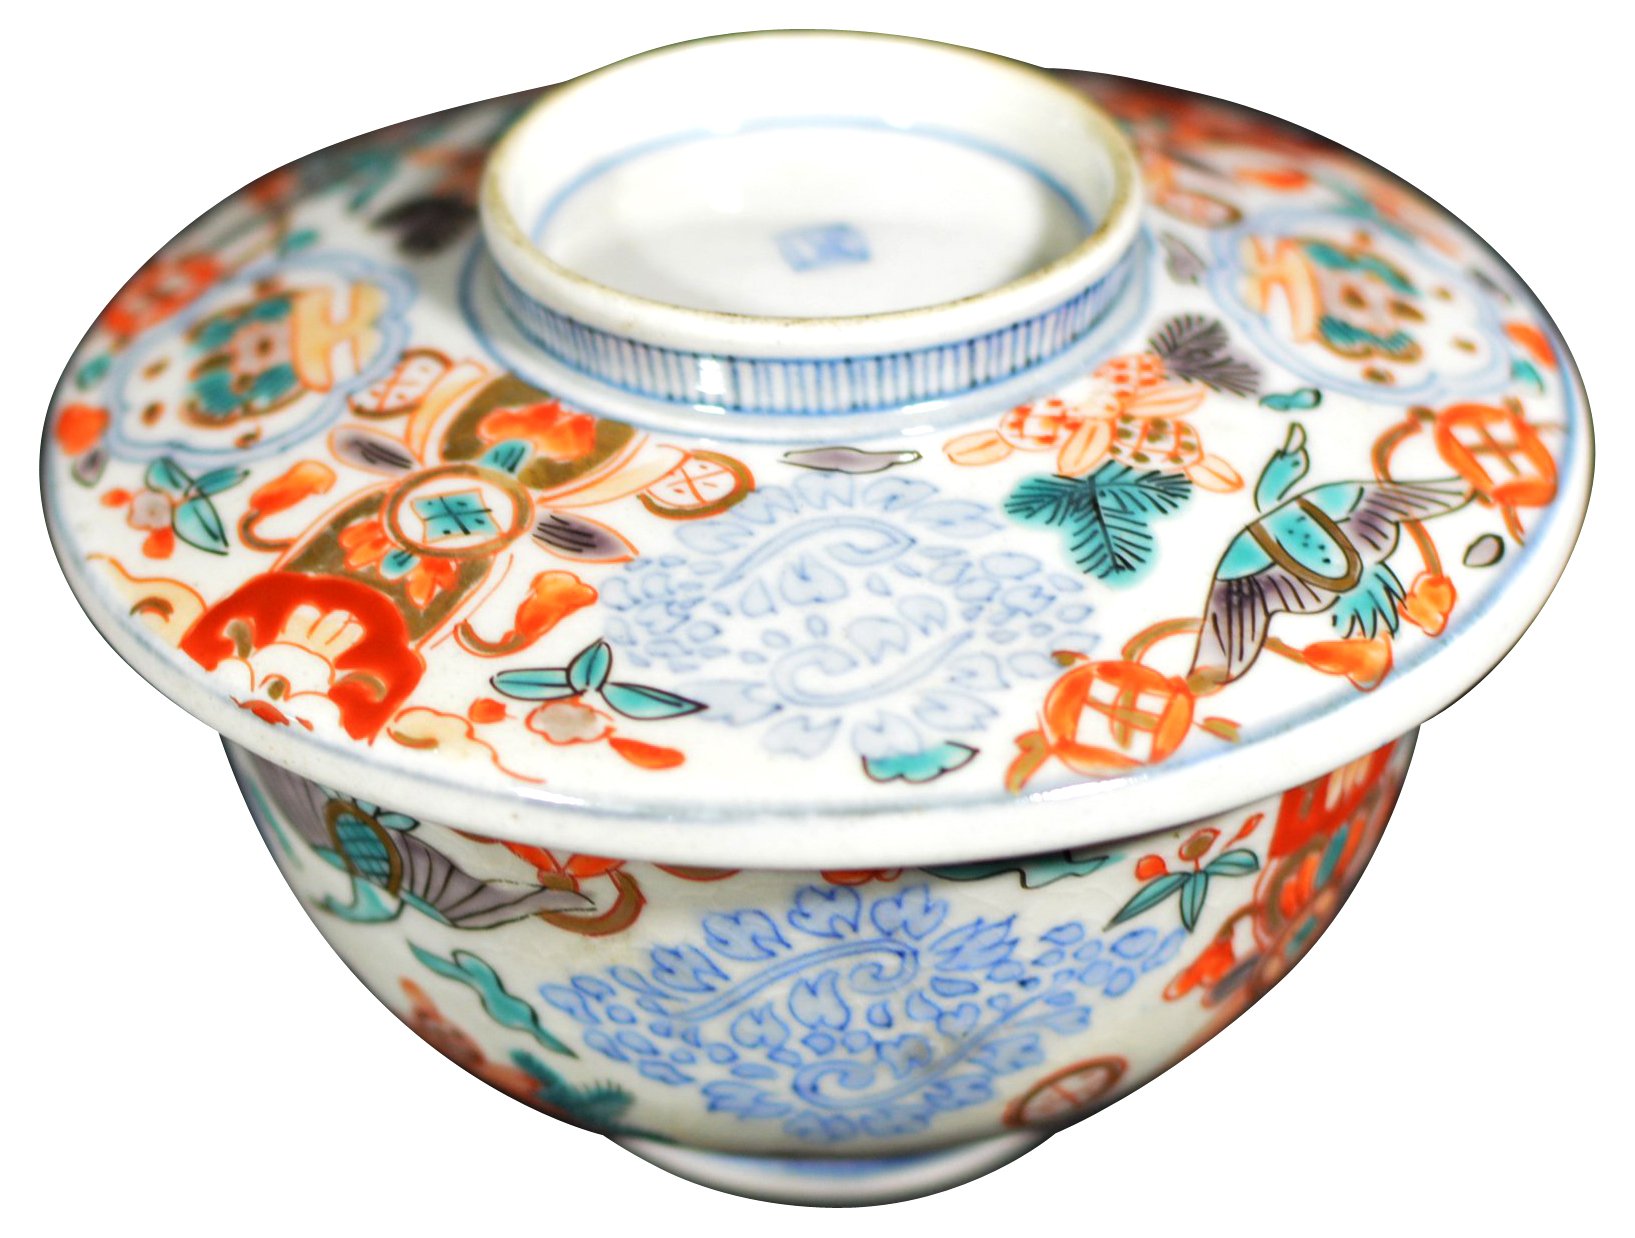 Antique Japanese Tea Ceremony Bowl~P77300455